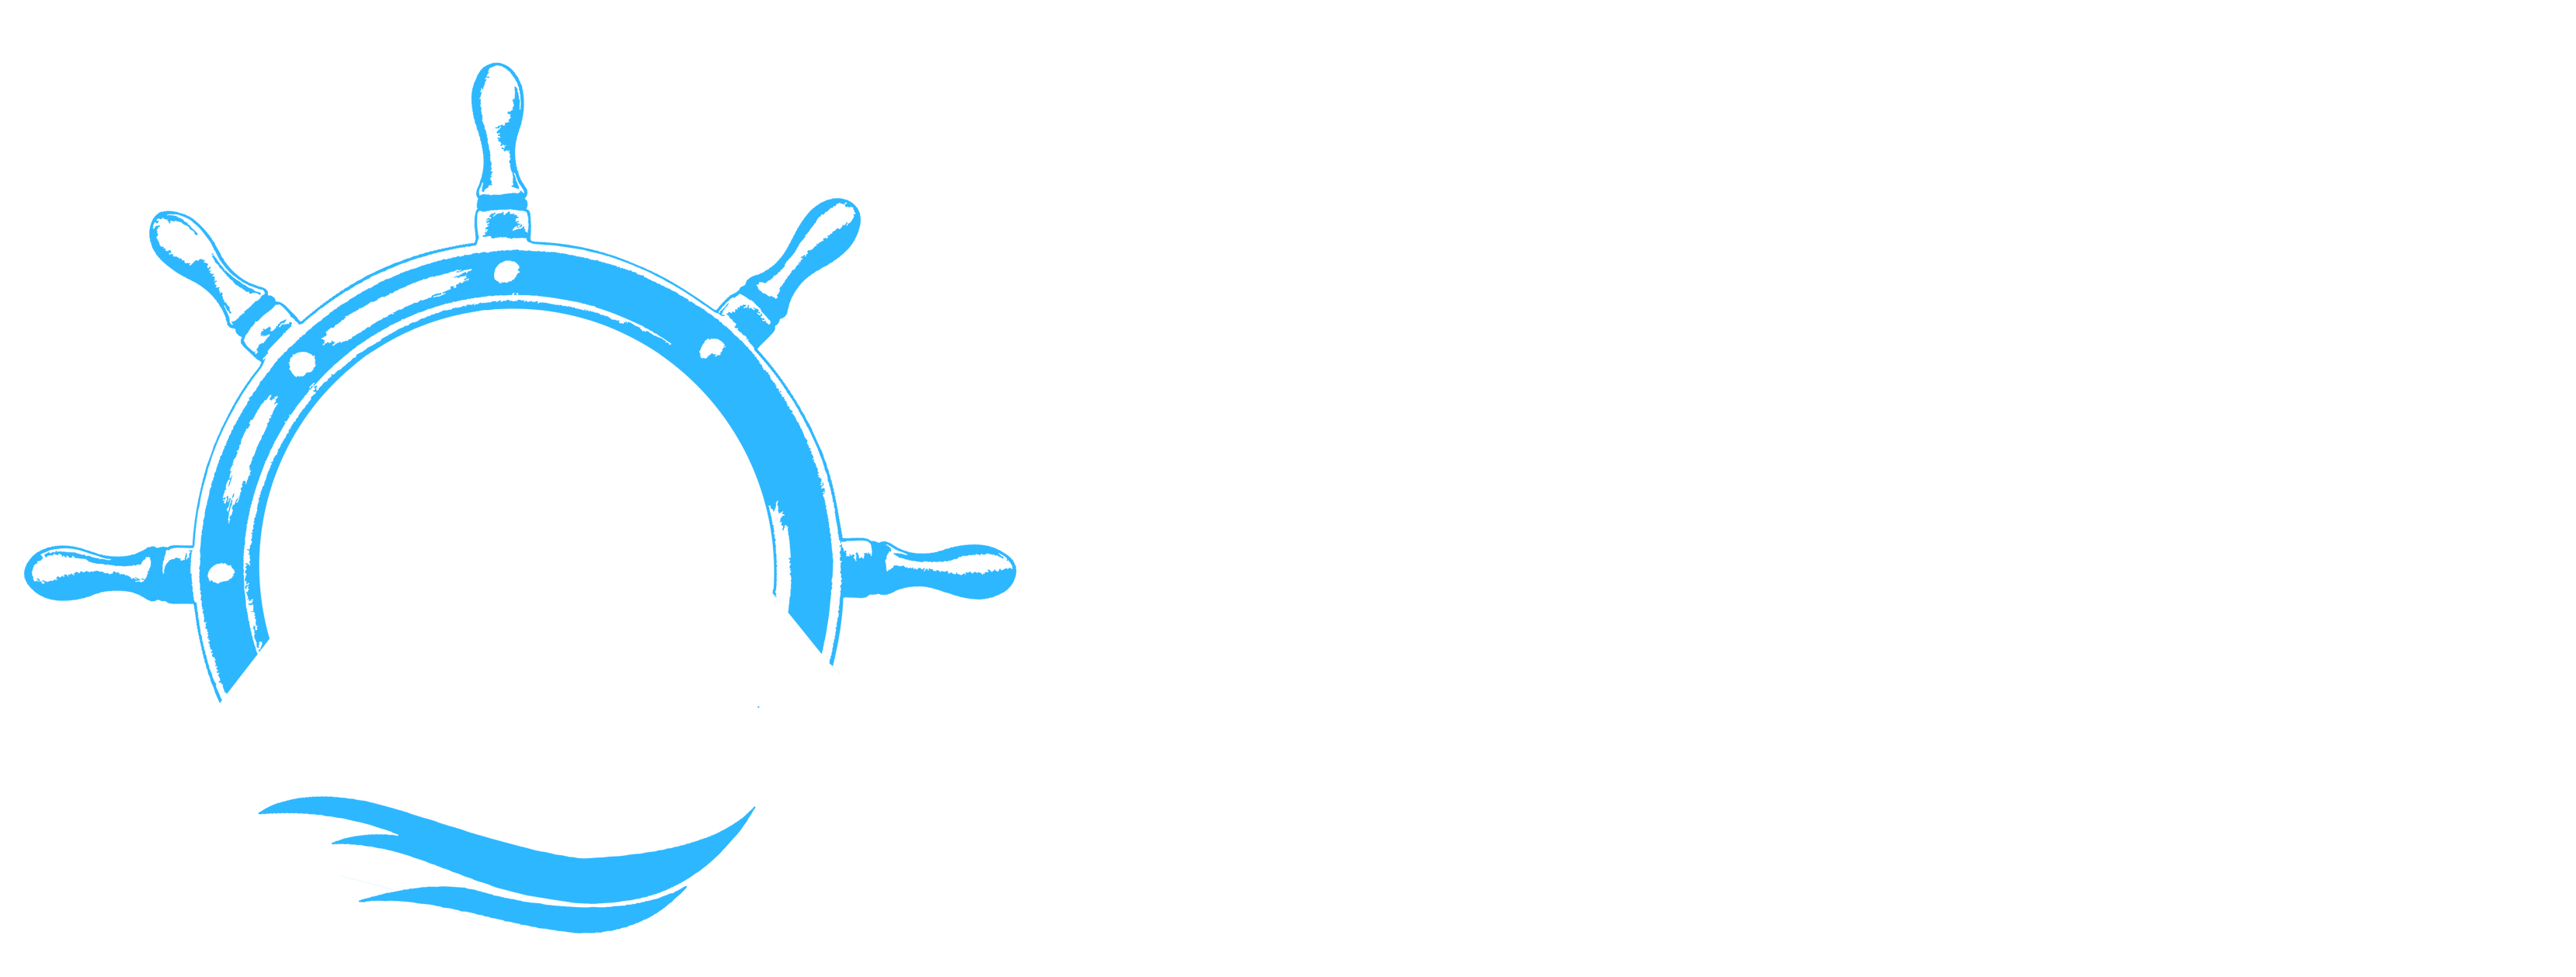 MV Seamore Liveaboard